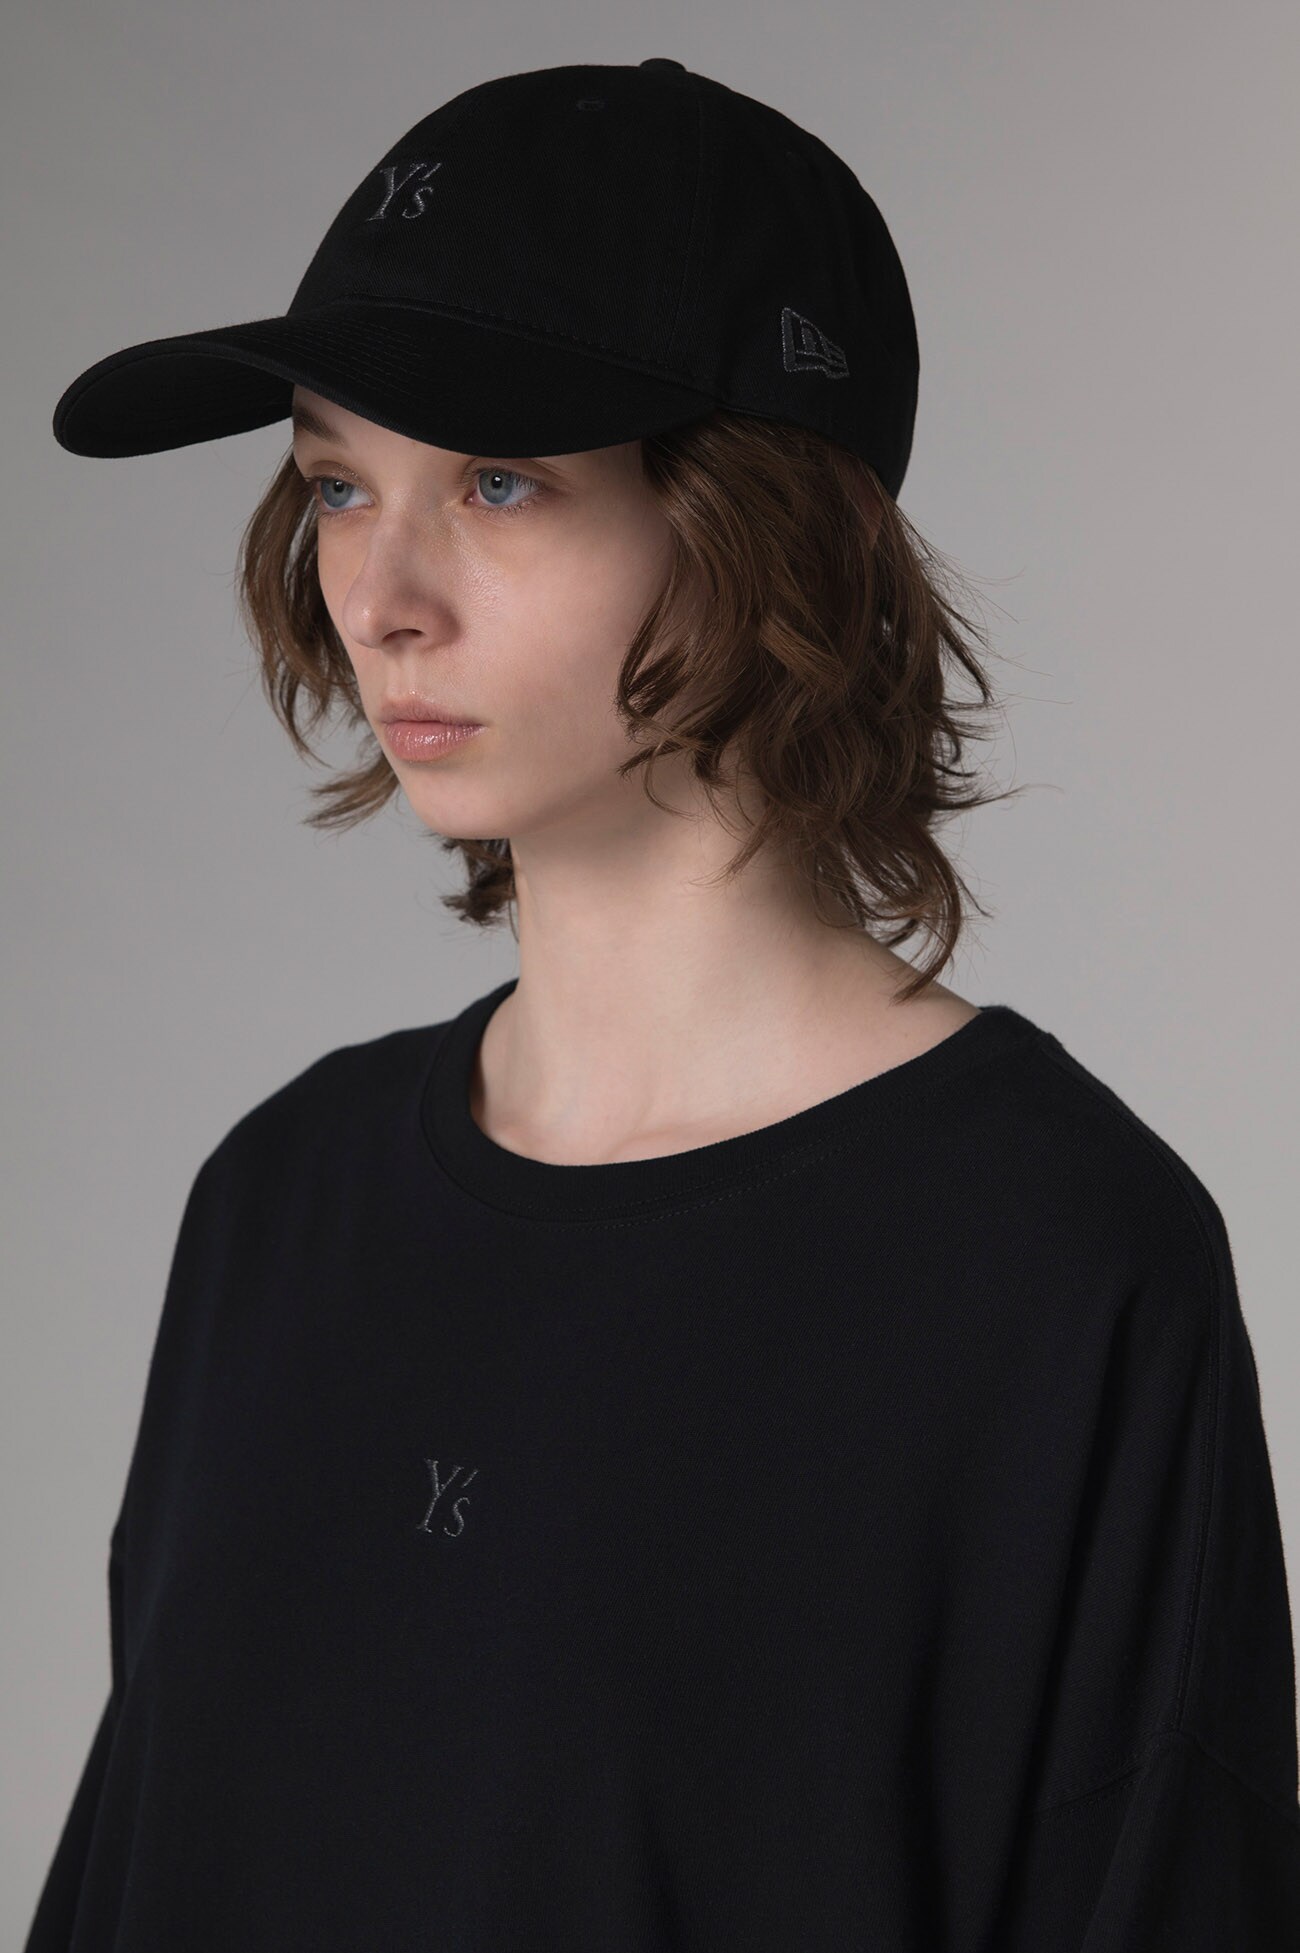 [Y's x New Era]9THIRTY Y's LOGO CAP